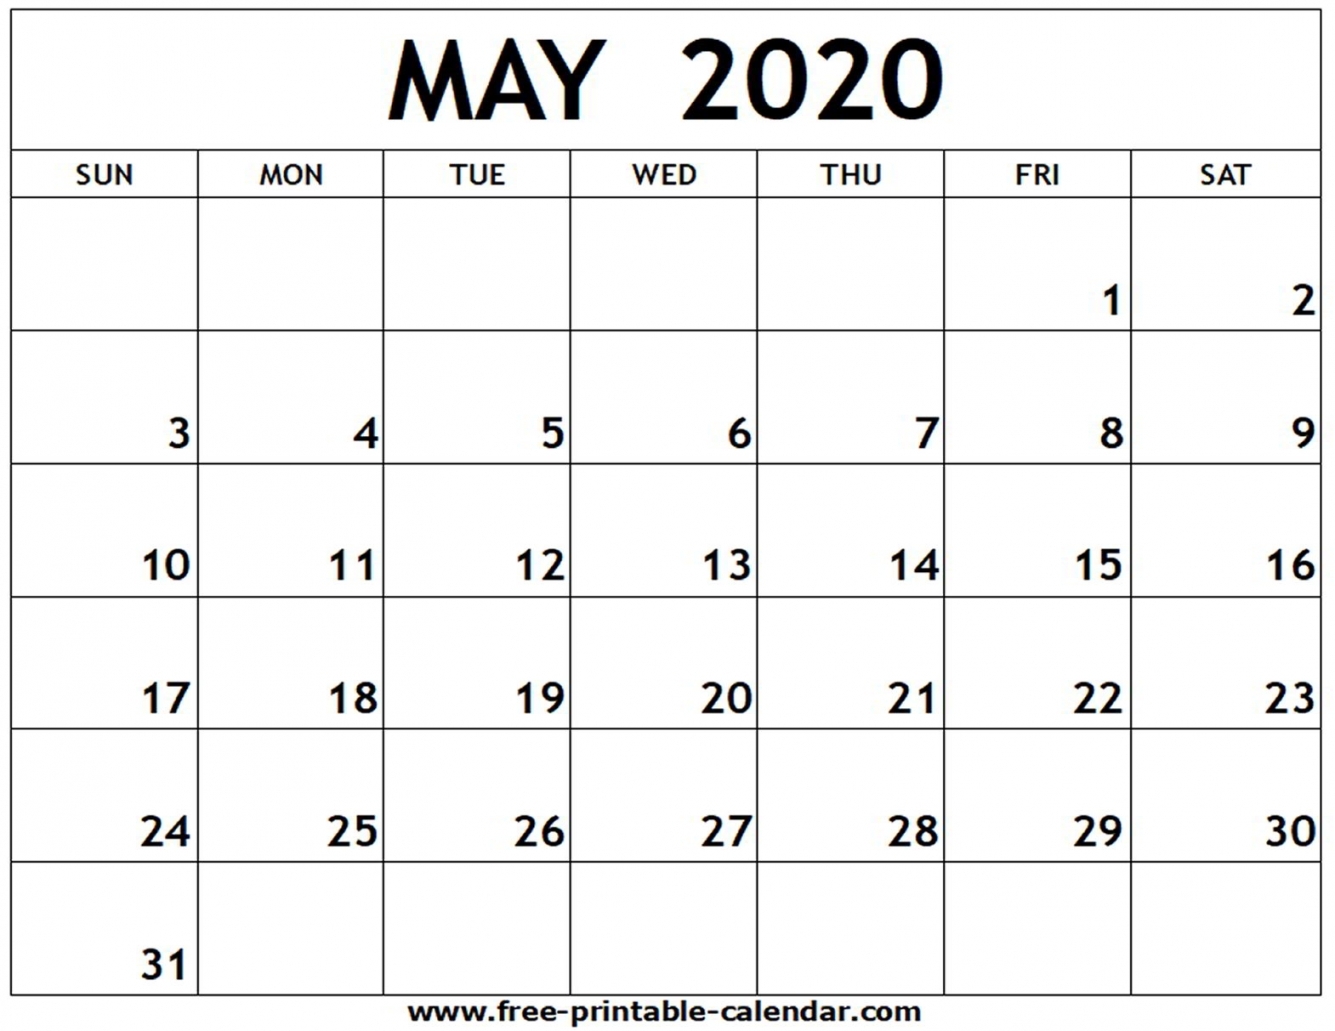 May 2020 Calendar With Holidays Printable